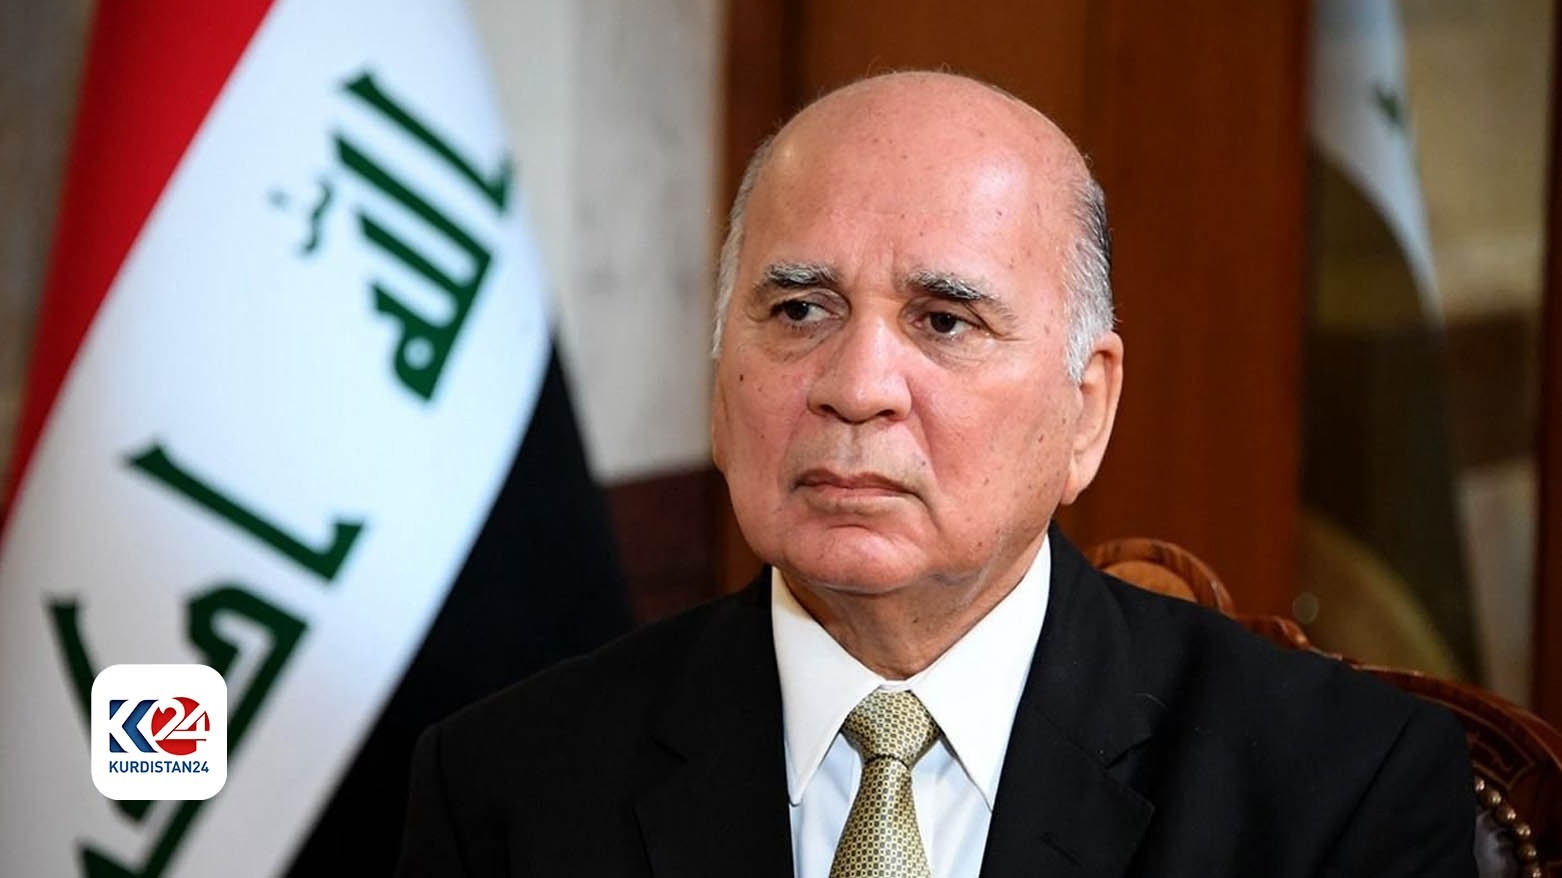 Erbil Baghdad agreed to resume Kurdistan Region oil exports says Iraqi spox